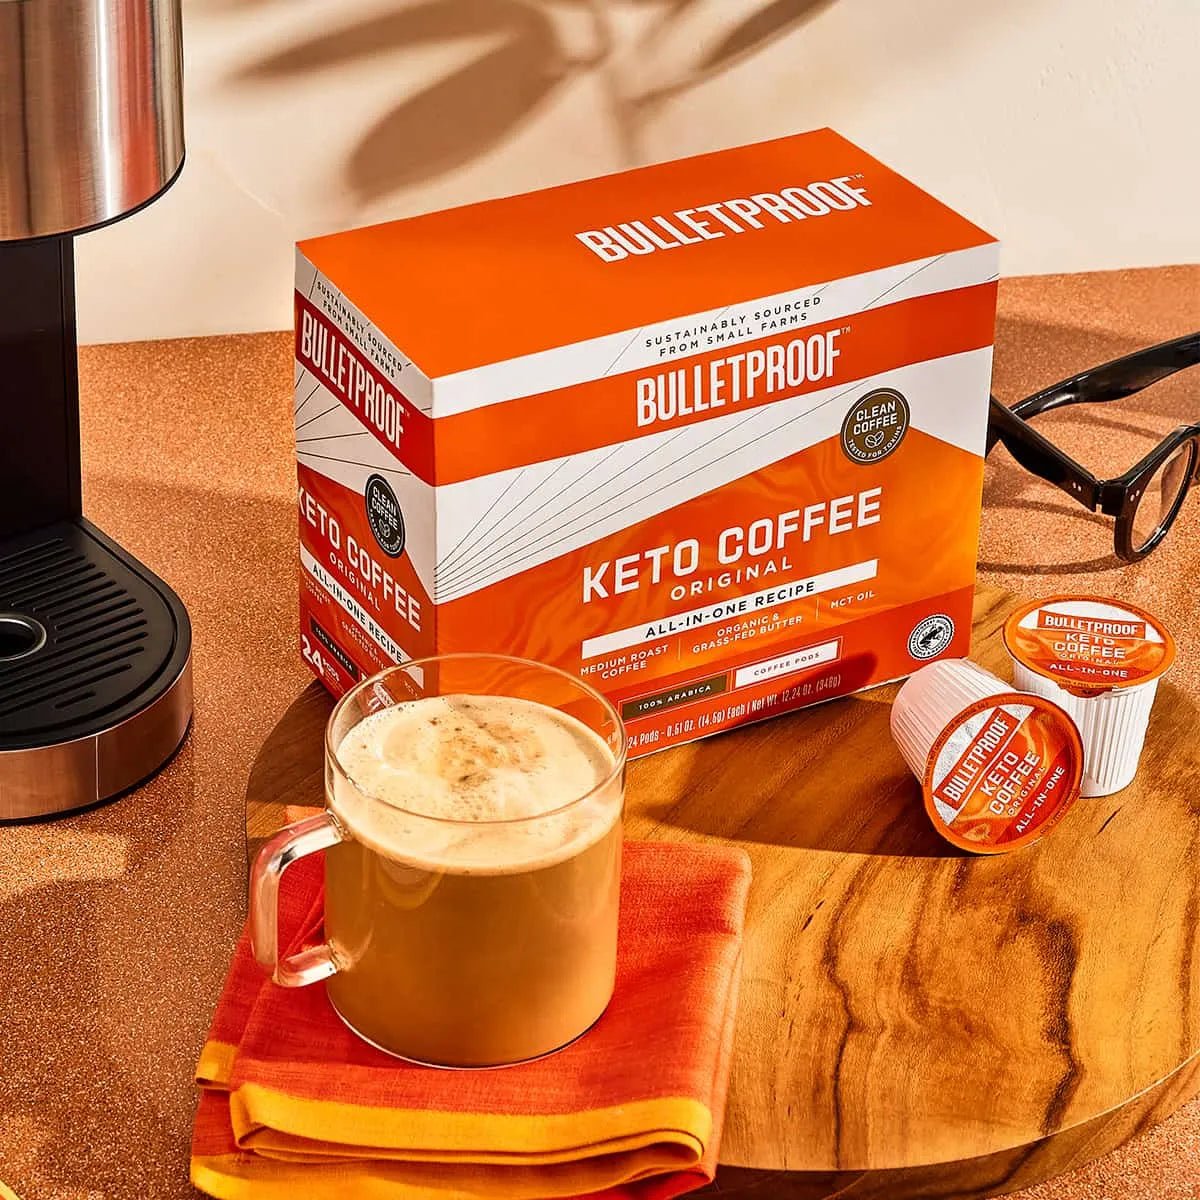 Bulletproof コーヒーポッド ケト・コーヒー24ポッド入り オールインワン・レシピ オリジナル ミディアムロースト KETO COFFEE PODS ALL-IN-ONE RECIPE, ORIGINAL, MEDIUM ROAST - HAPIVERI